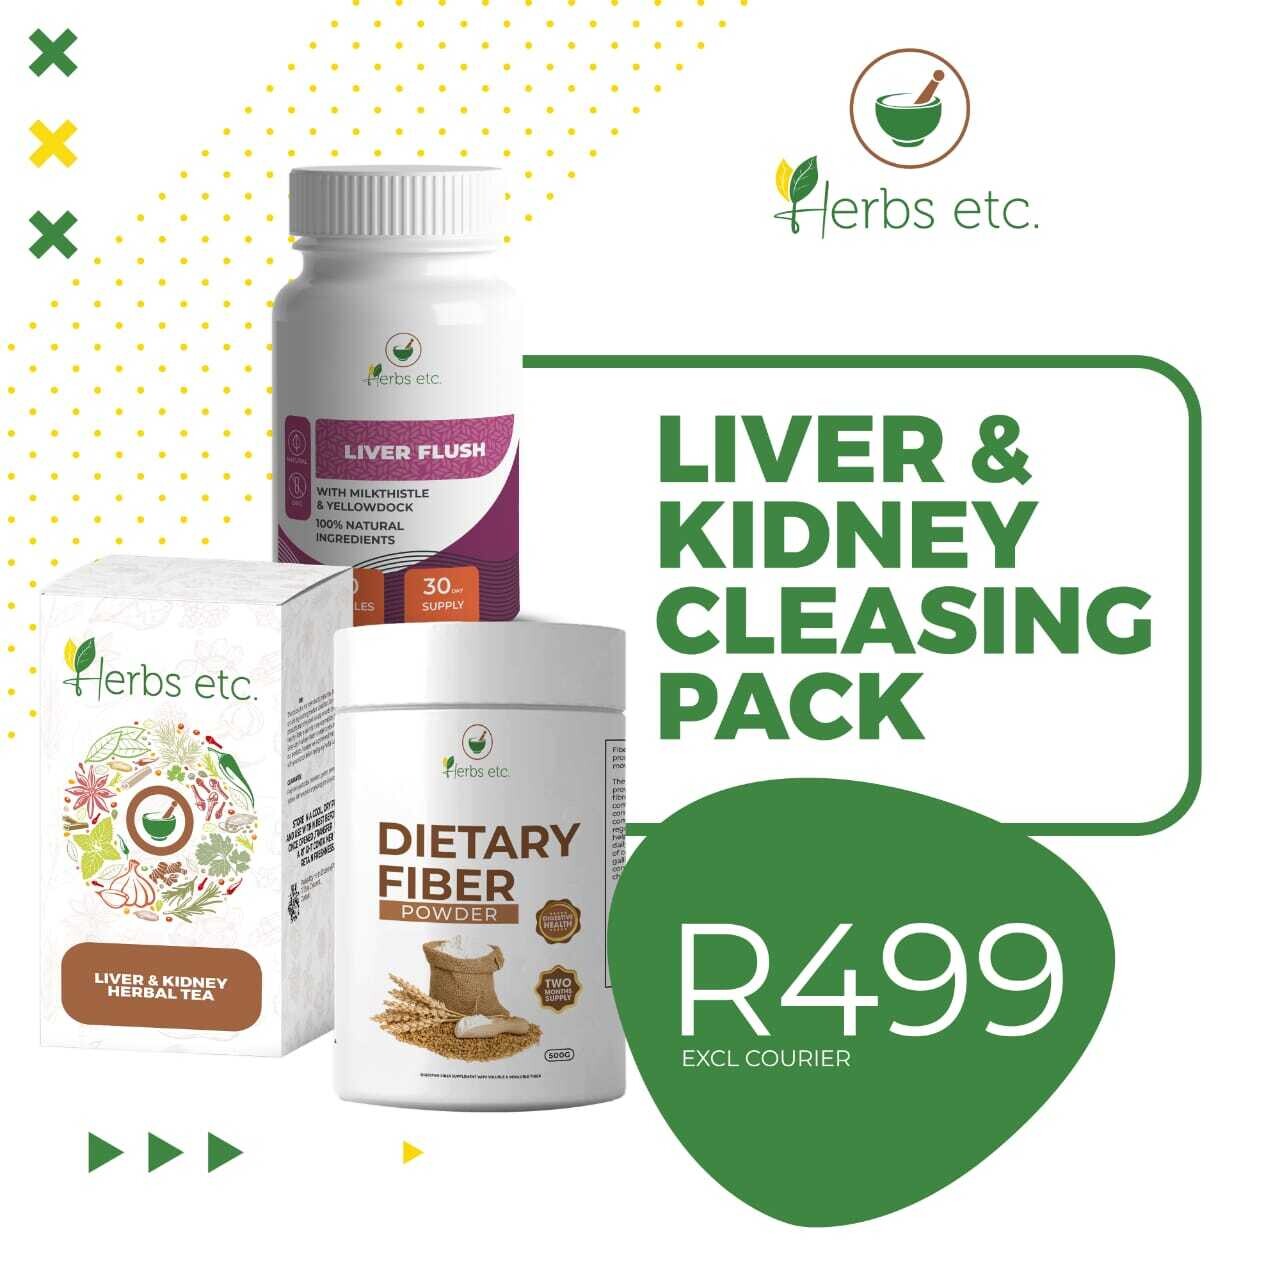 Liver & Kidney Cleansing Pack